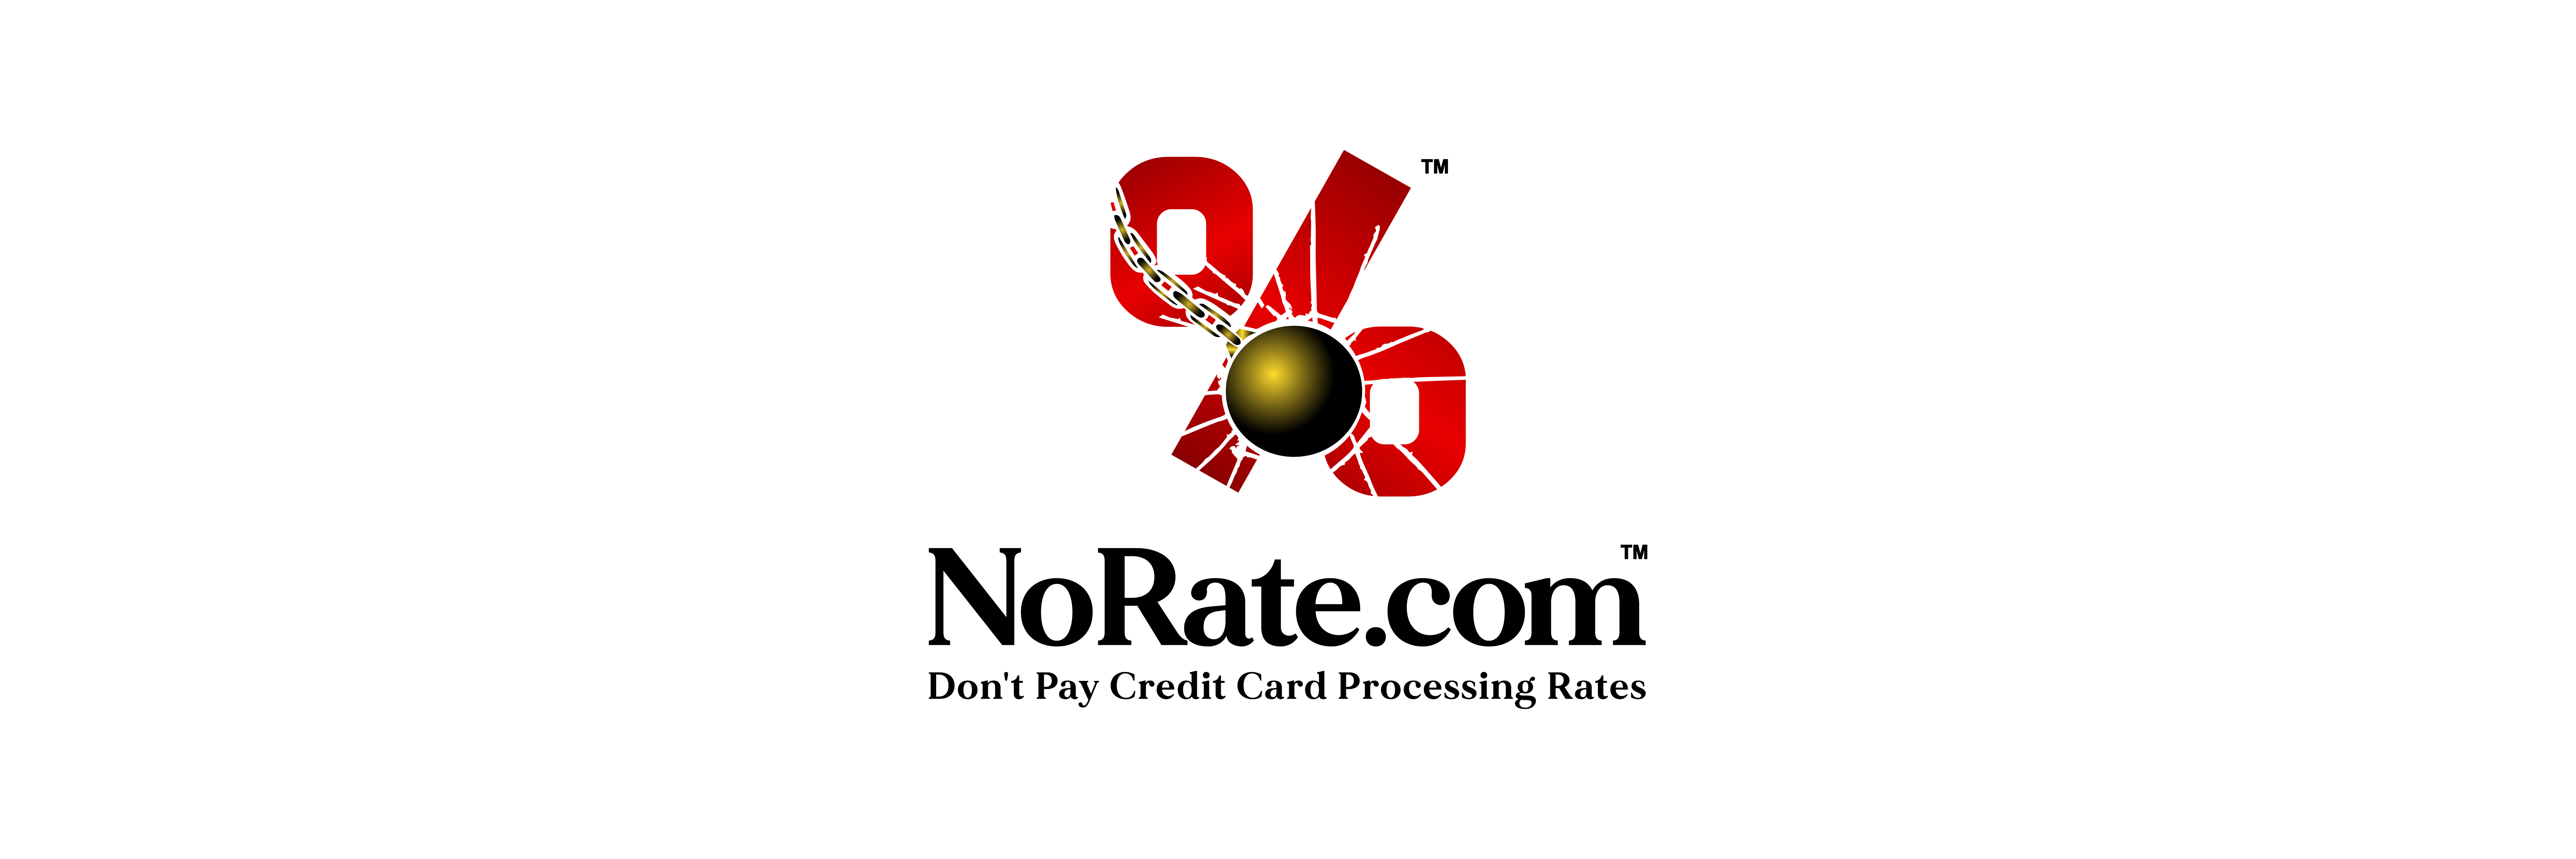 0% NoRate.com Credit Card Processing